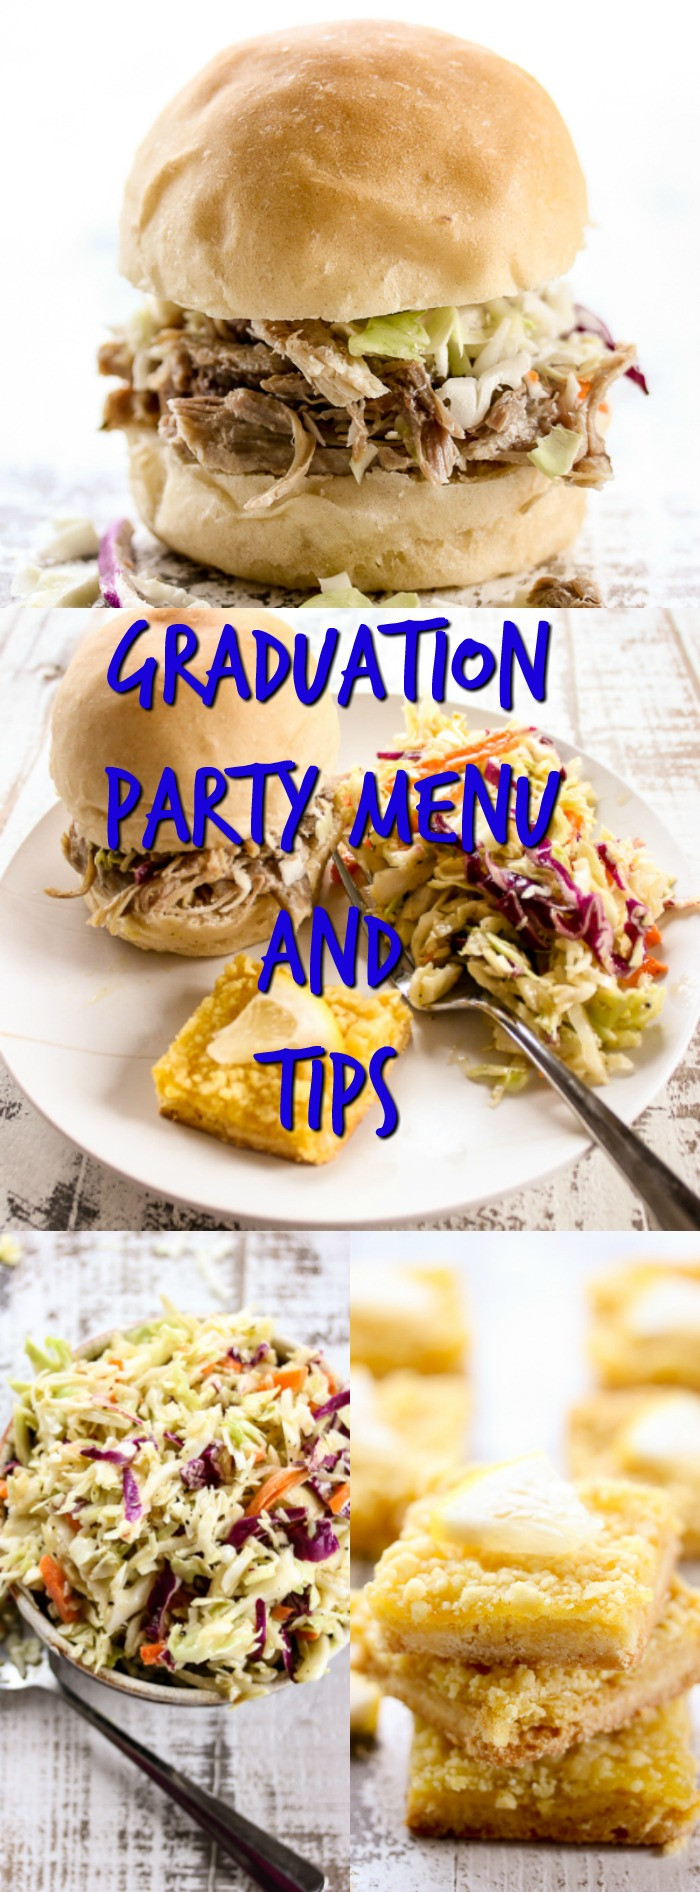 Graduation Party Food Menu Ideas
 Graduation Party Menu and Tips Lisa s Dinnertime Dish